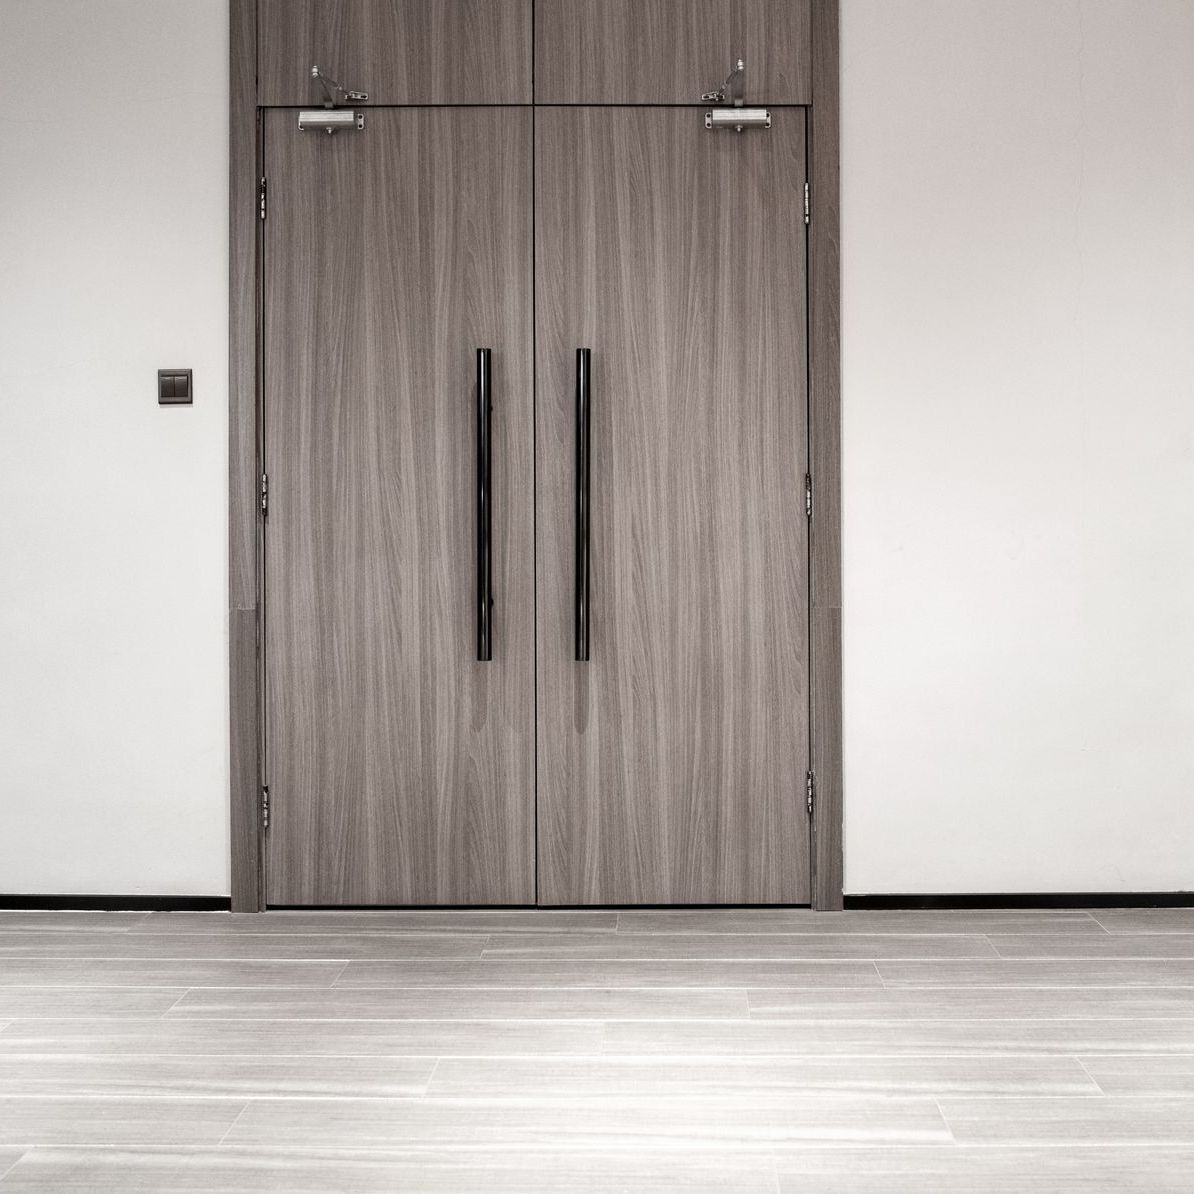 Wooden Doors With Black Handles | Otsego, MN | The Window Guys